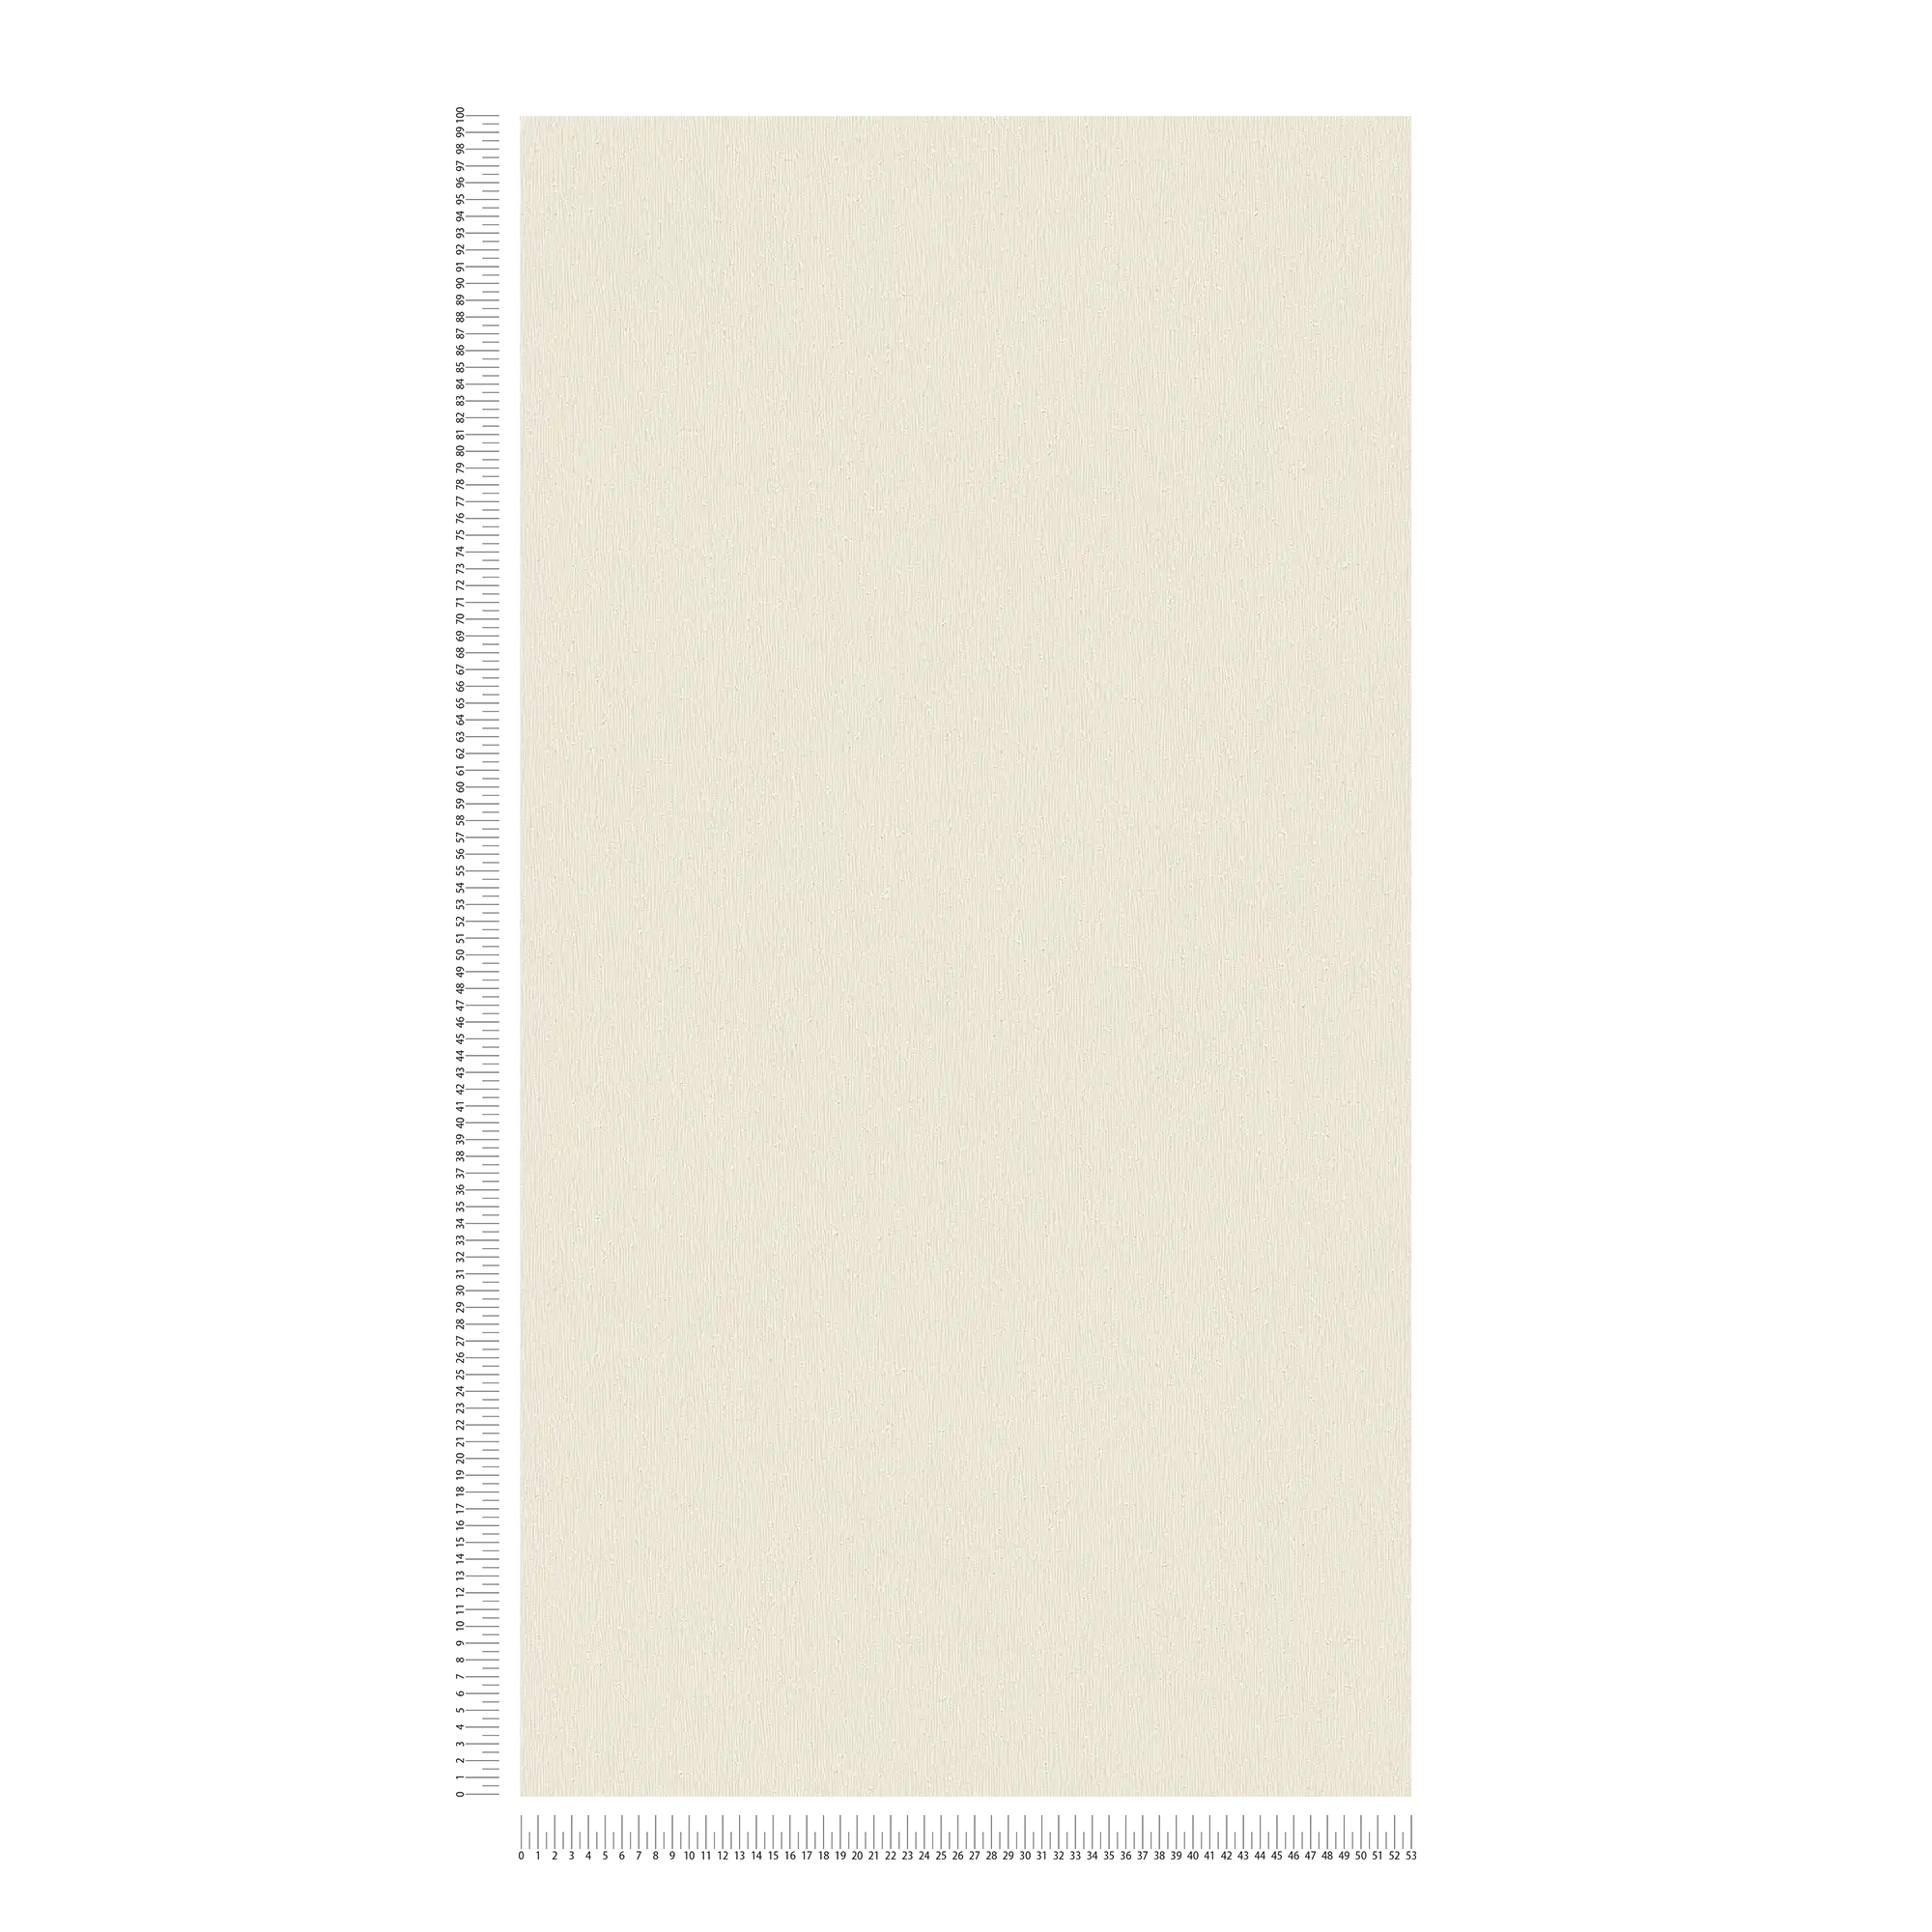             Crème vliesbehang met monochroom structuurdesign - crème, wit
        